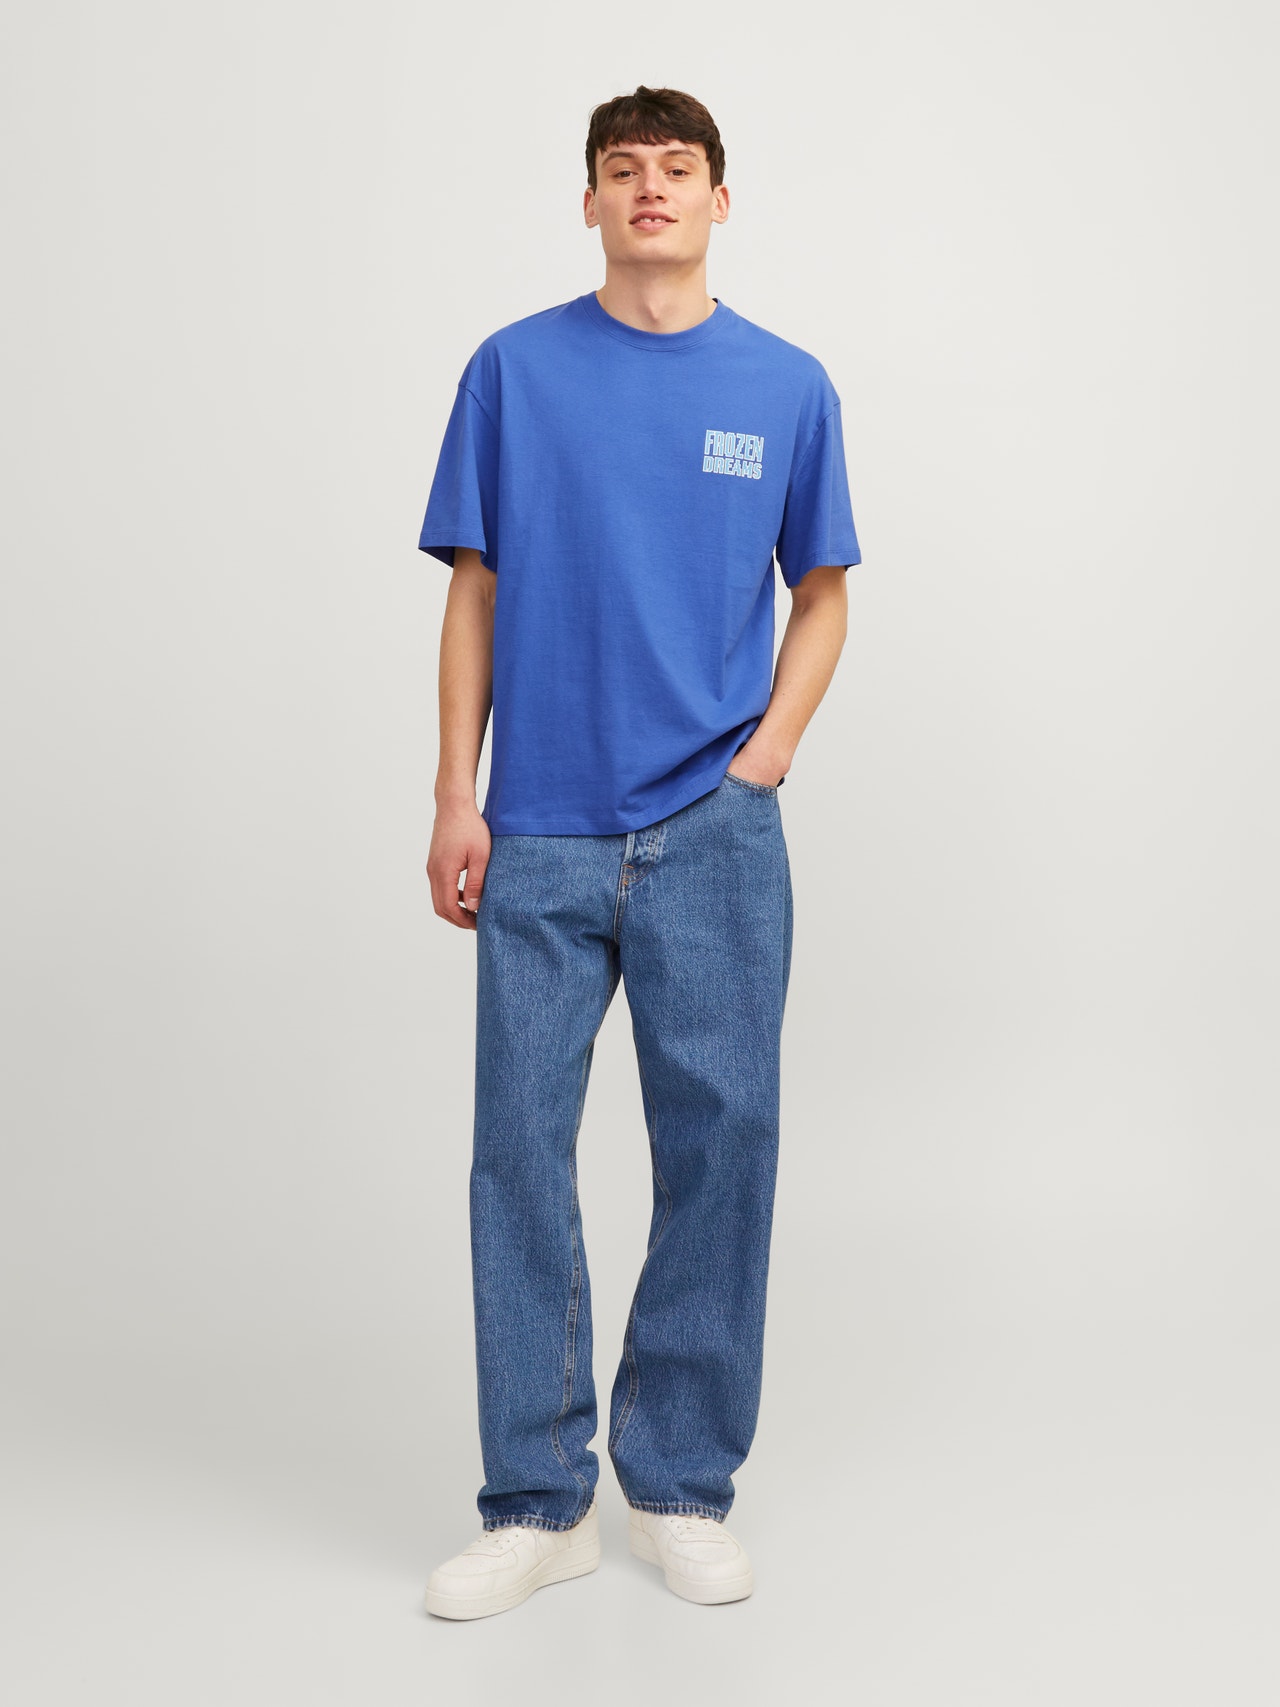 Jack & Jones T-shirt Estampar Decote Redondo -Dazzling Blue - 12256928